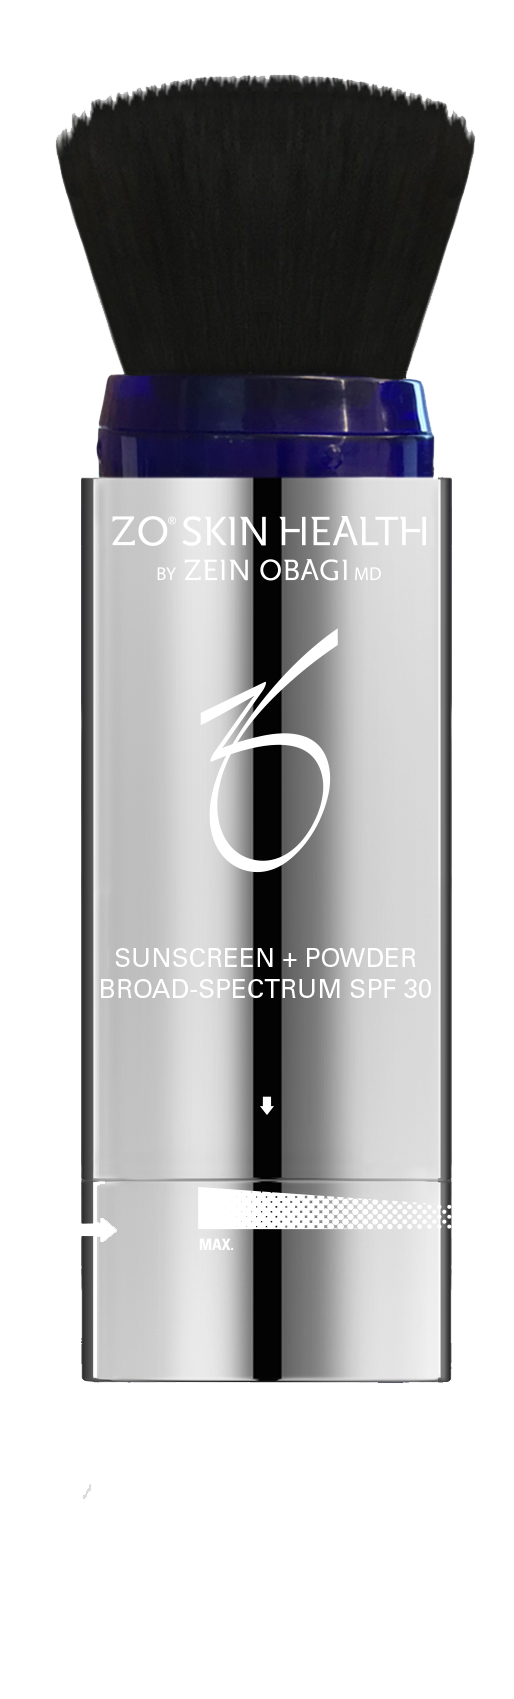 ZO Skin Health Sunscreen + Powder Broad-Spectrum SPF 30 - DEEP